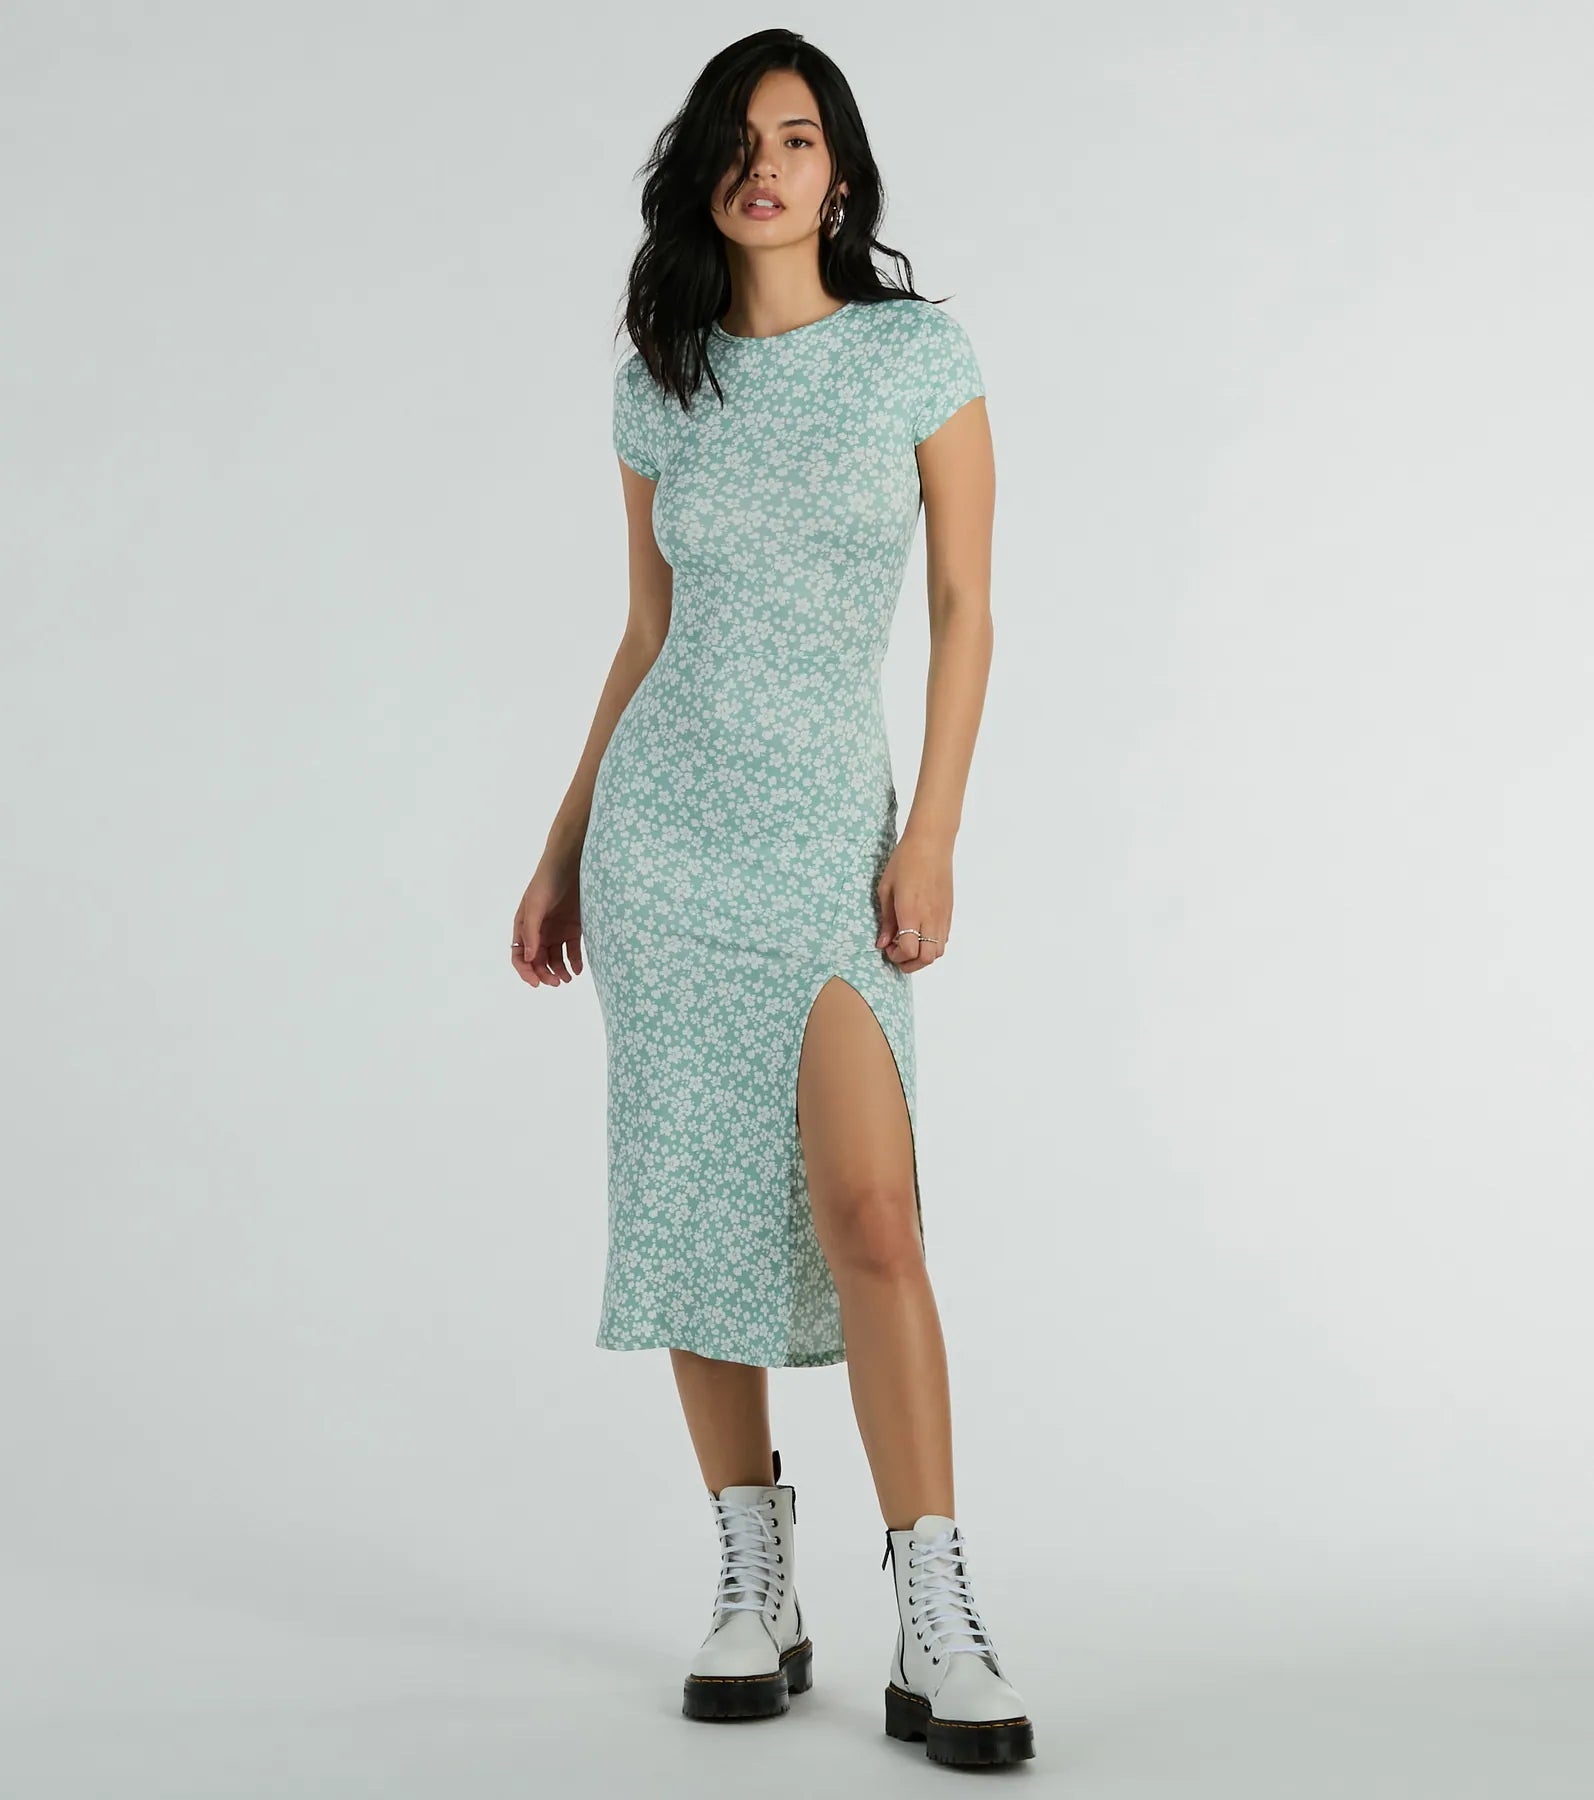 Crew Neck Knit Short Sleeves Sleeves Spring Floral Print Cutout Slit Stretchy Bodycon Dress/Midi Dress